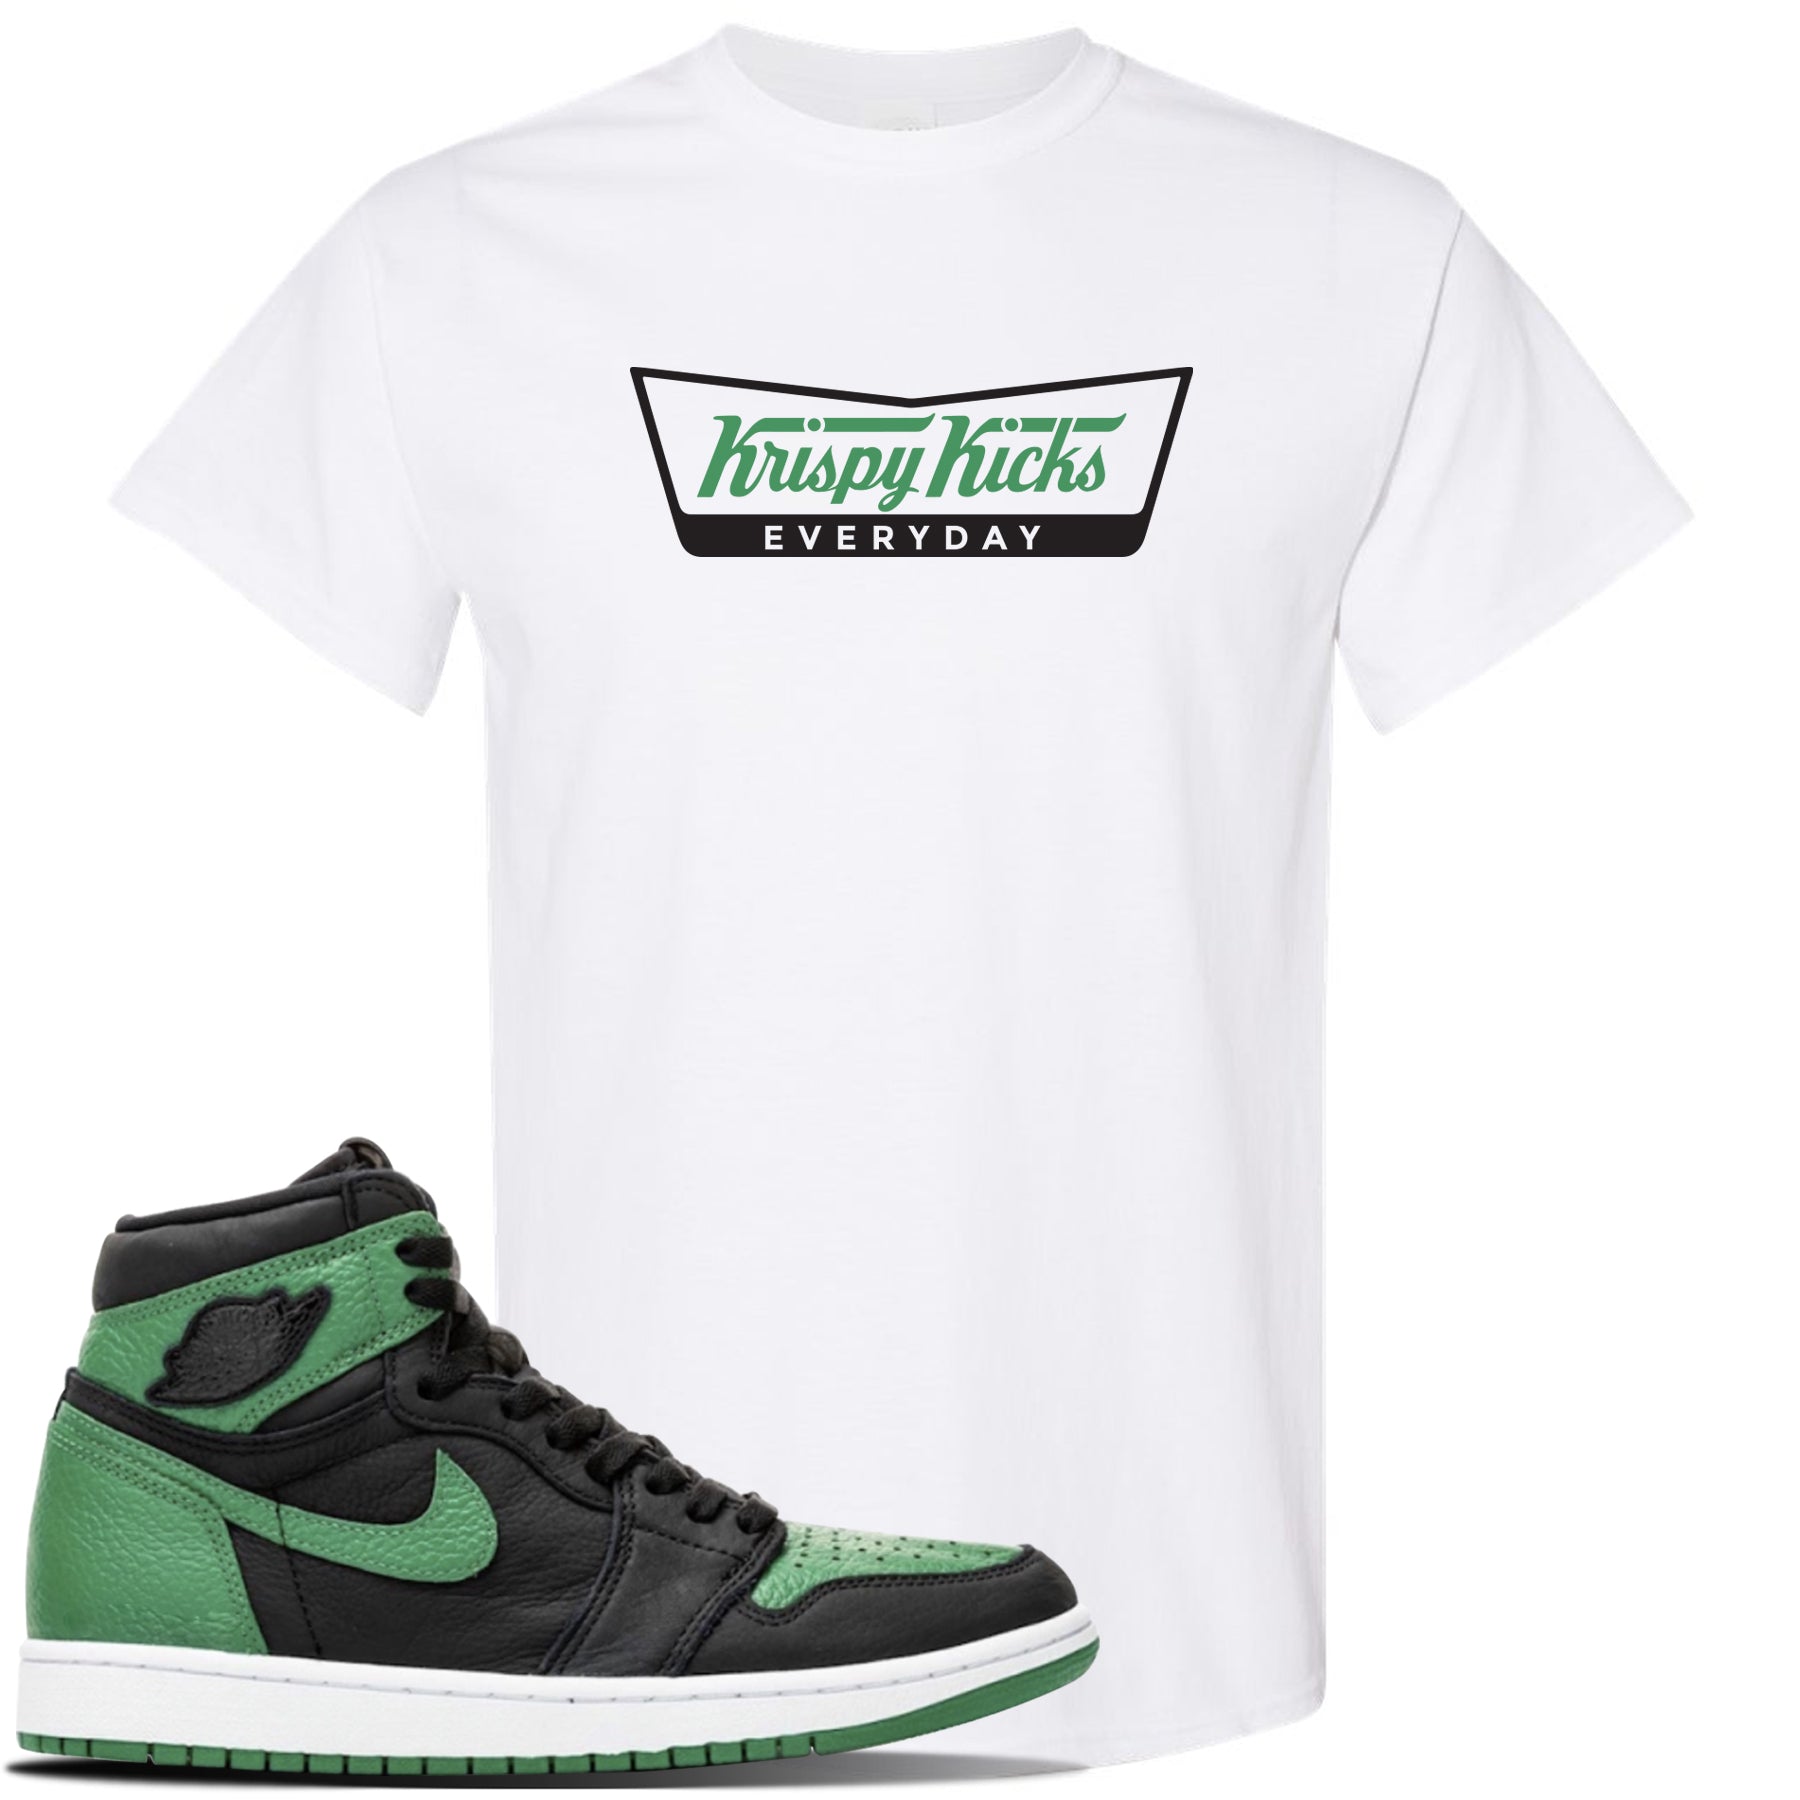 shirts for pine green jordan 1